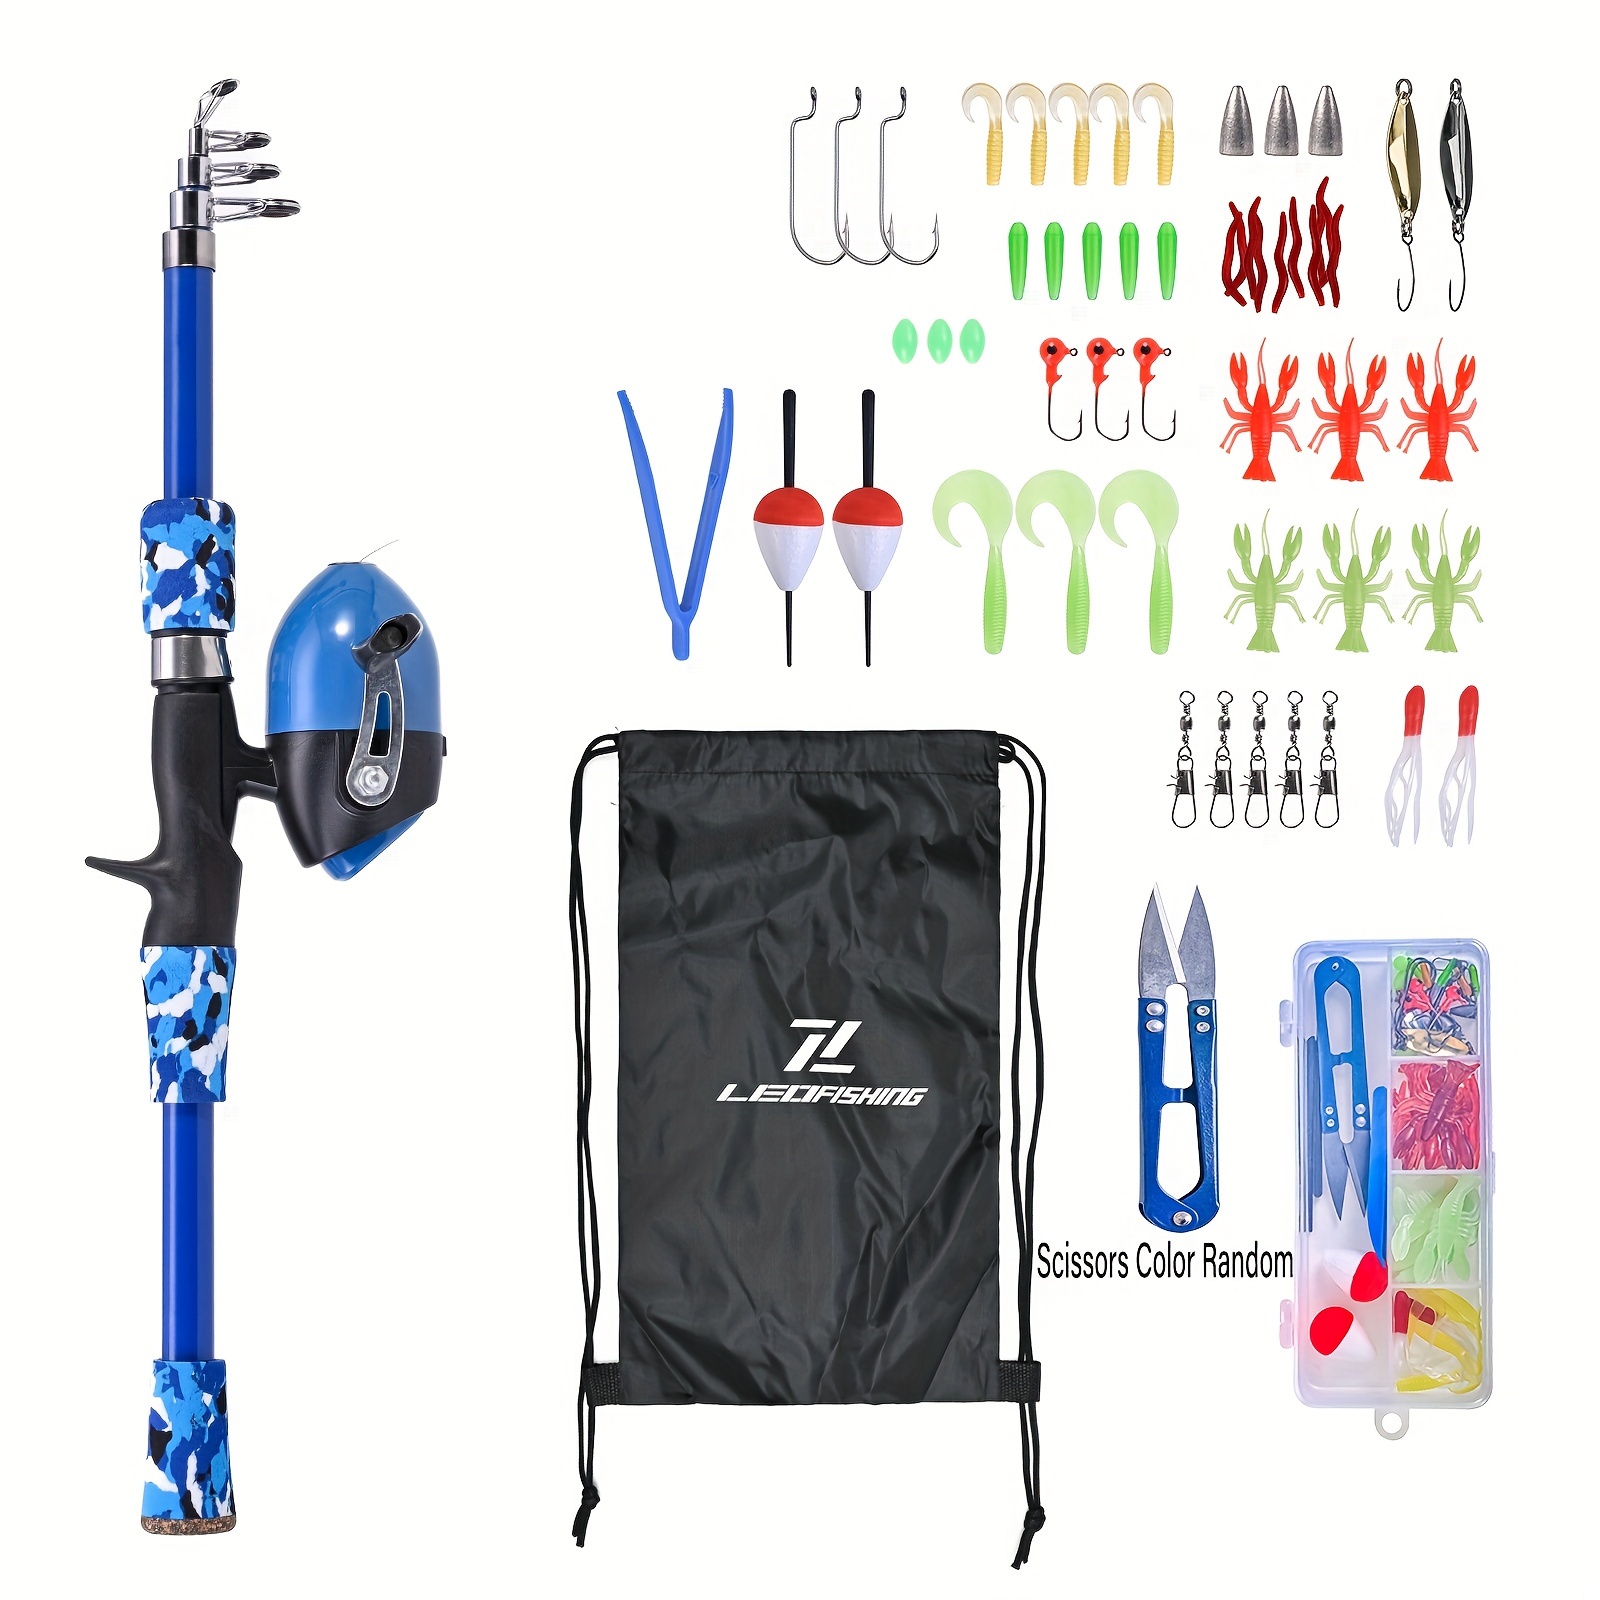 LEOFISHING Kids Fishing Pole Set with Full Starter Kits Portable